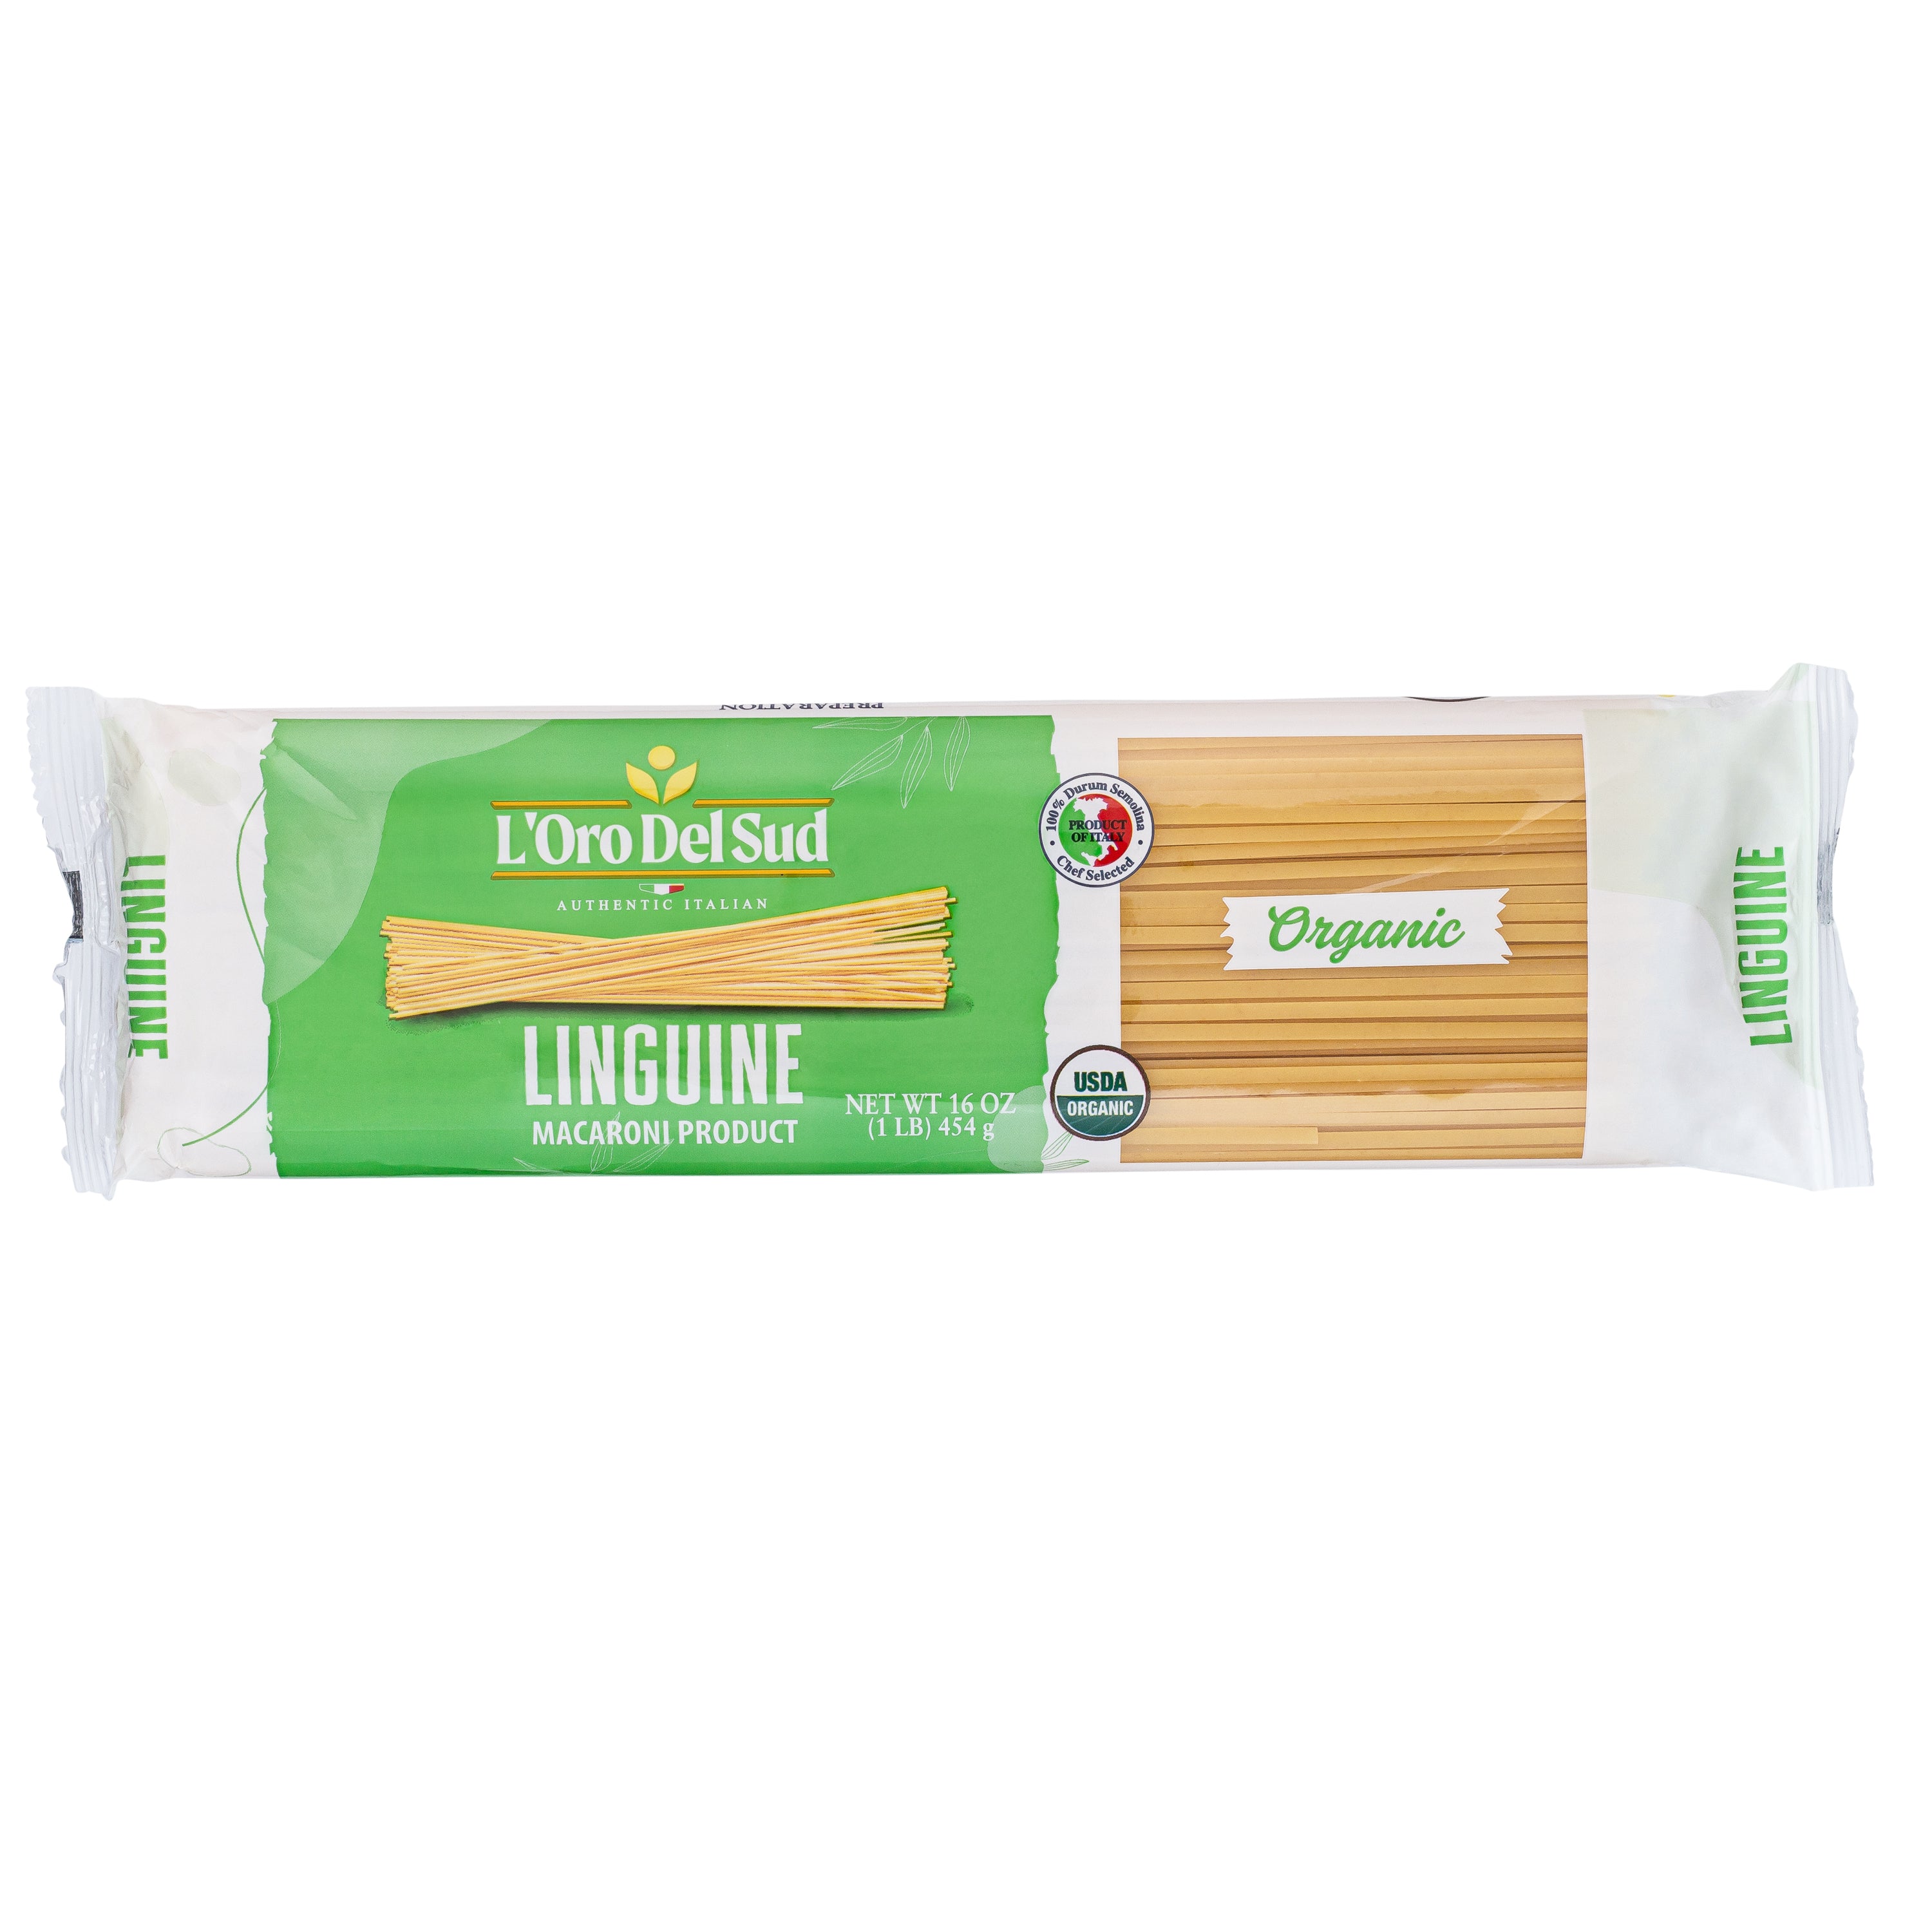 L'Oro Del Sud Linguine Pasta 1 lb. Bag (Organic)